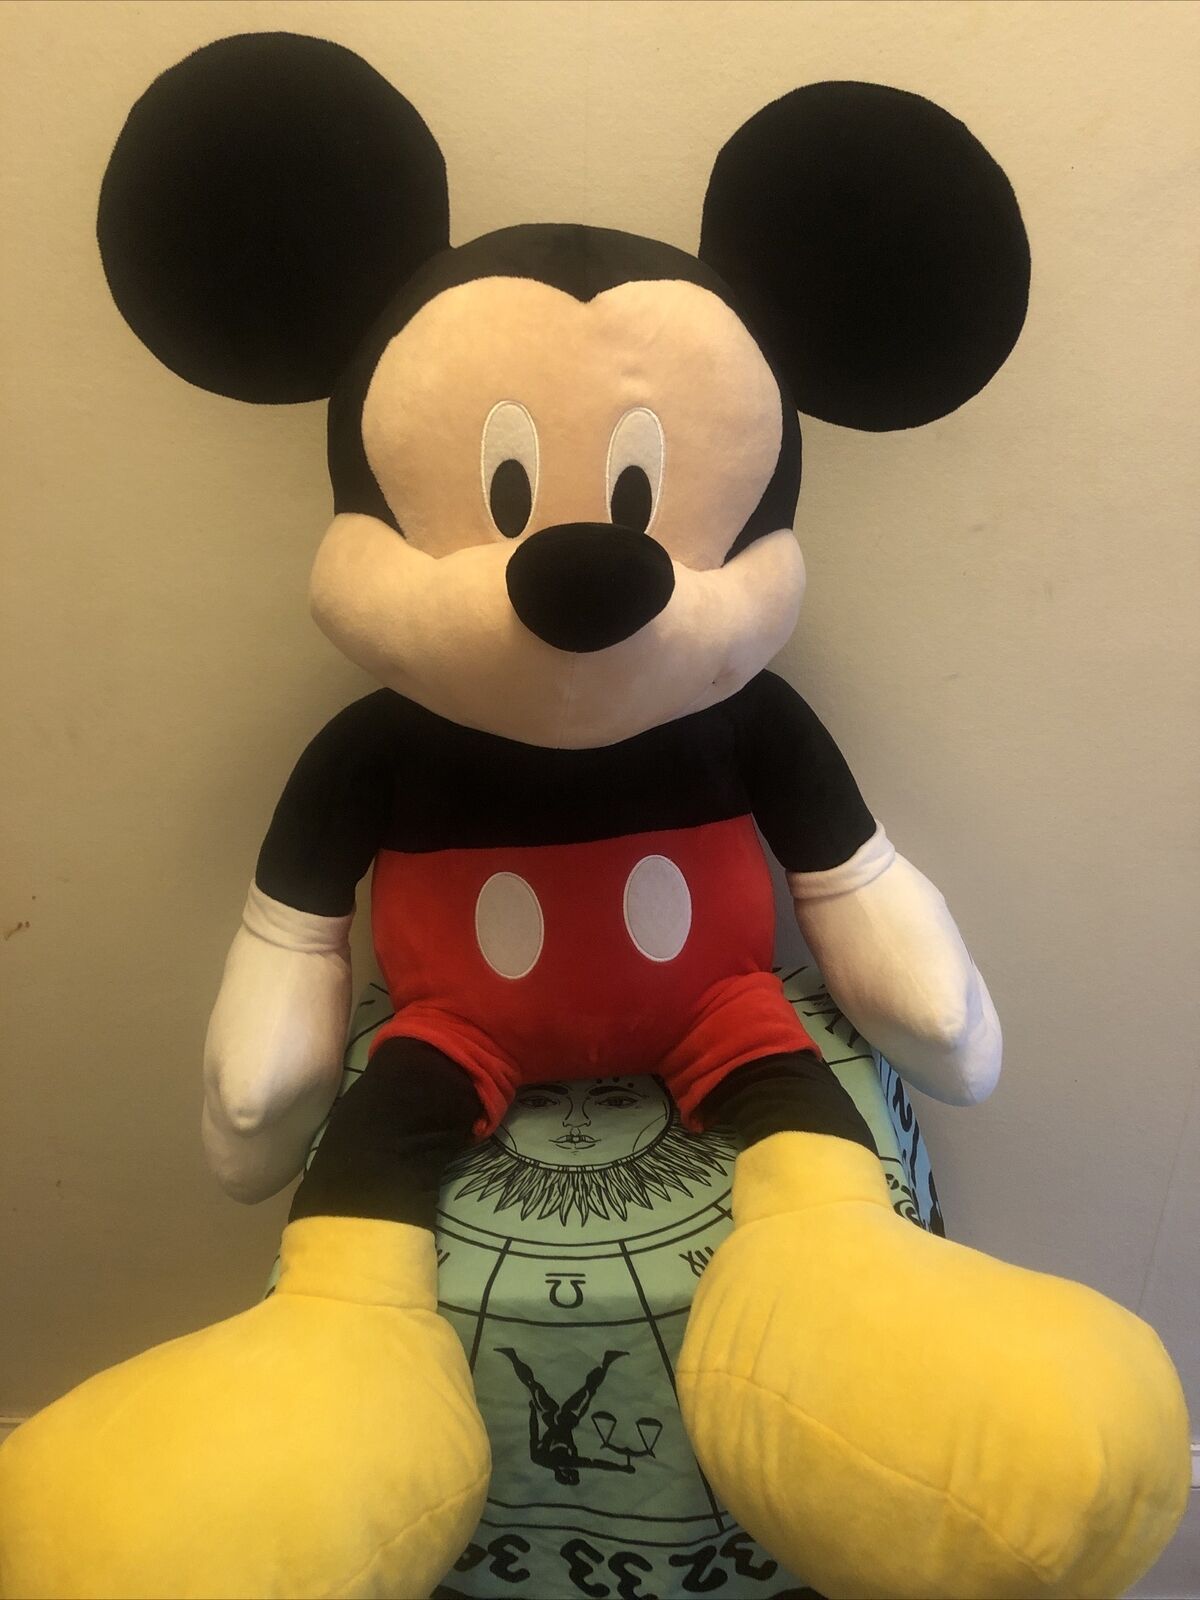 Jumbo Disney Mickey Mouse Plush 36” Life Size Stuffed Animal Toy Doll